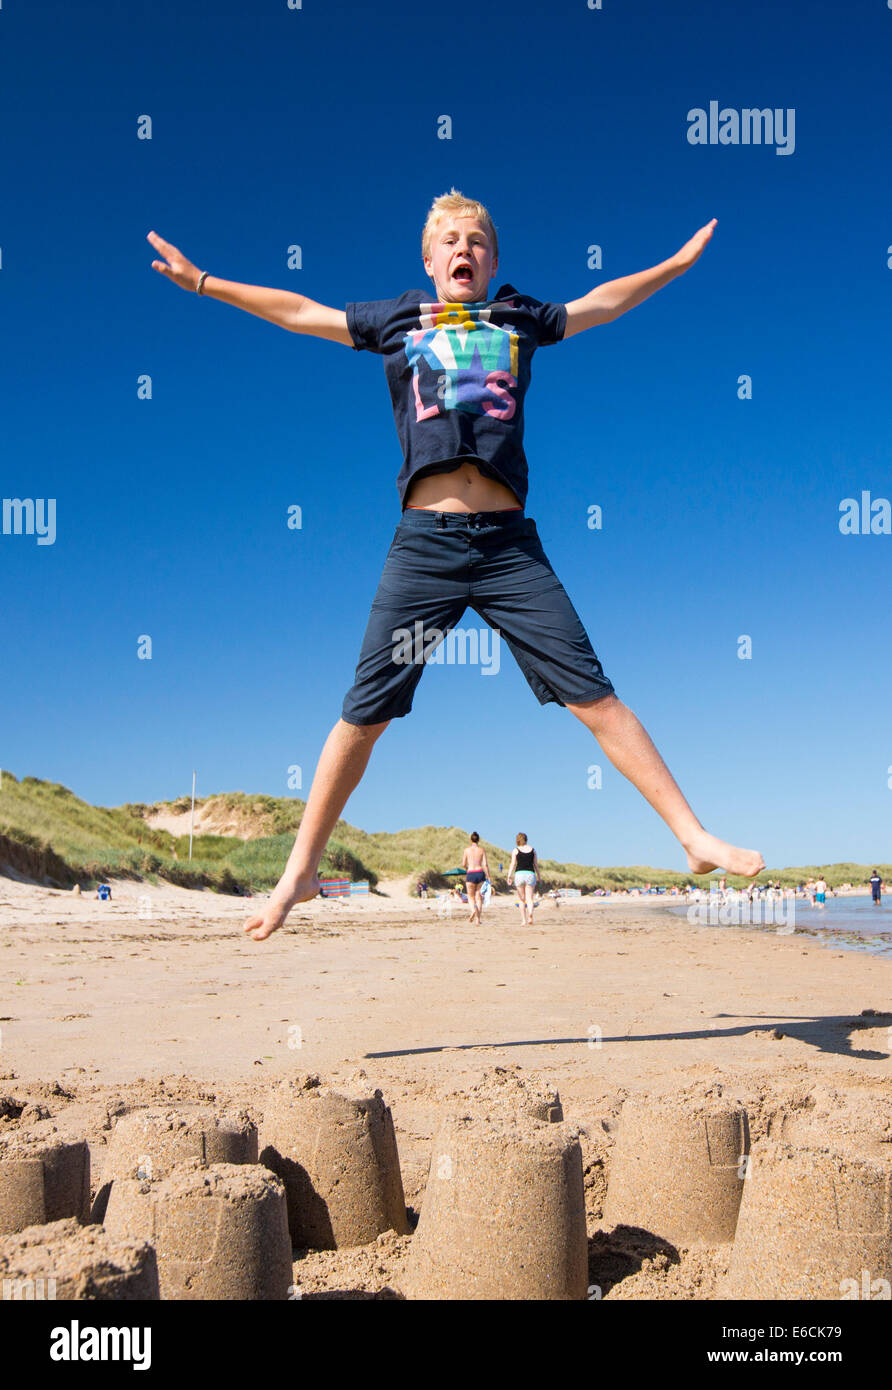 A boy jumping over a sandcastle on Bamburgh Beach, Northumberland, UK. Stock Photo